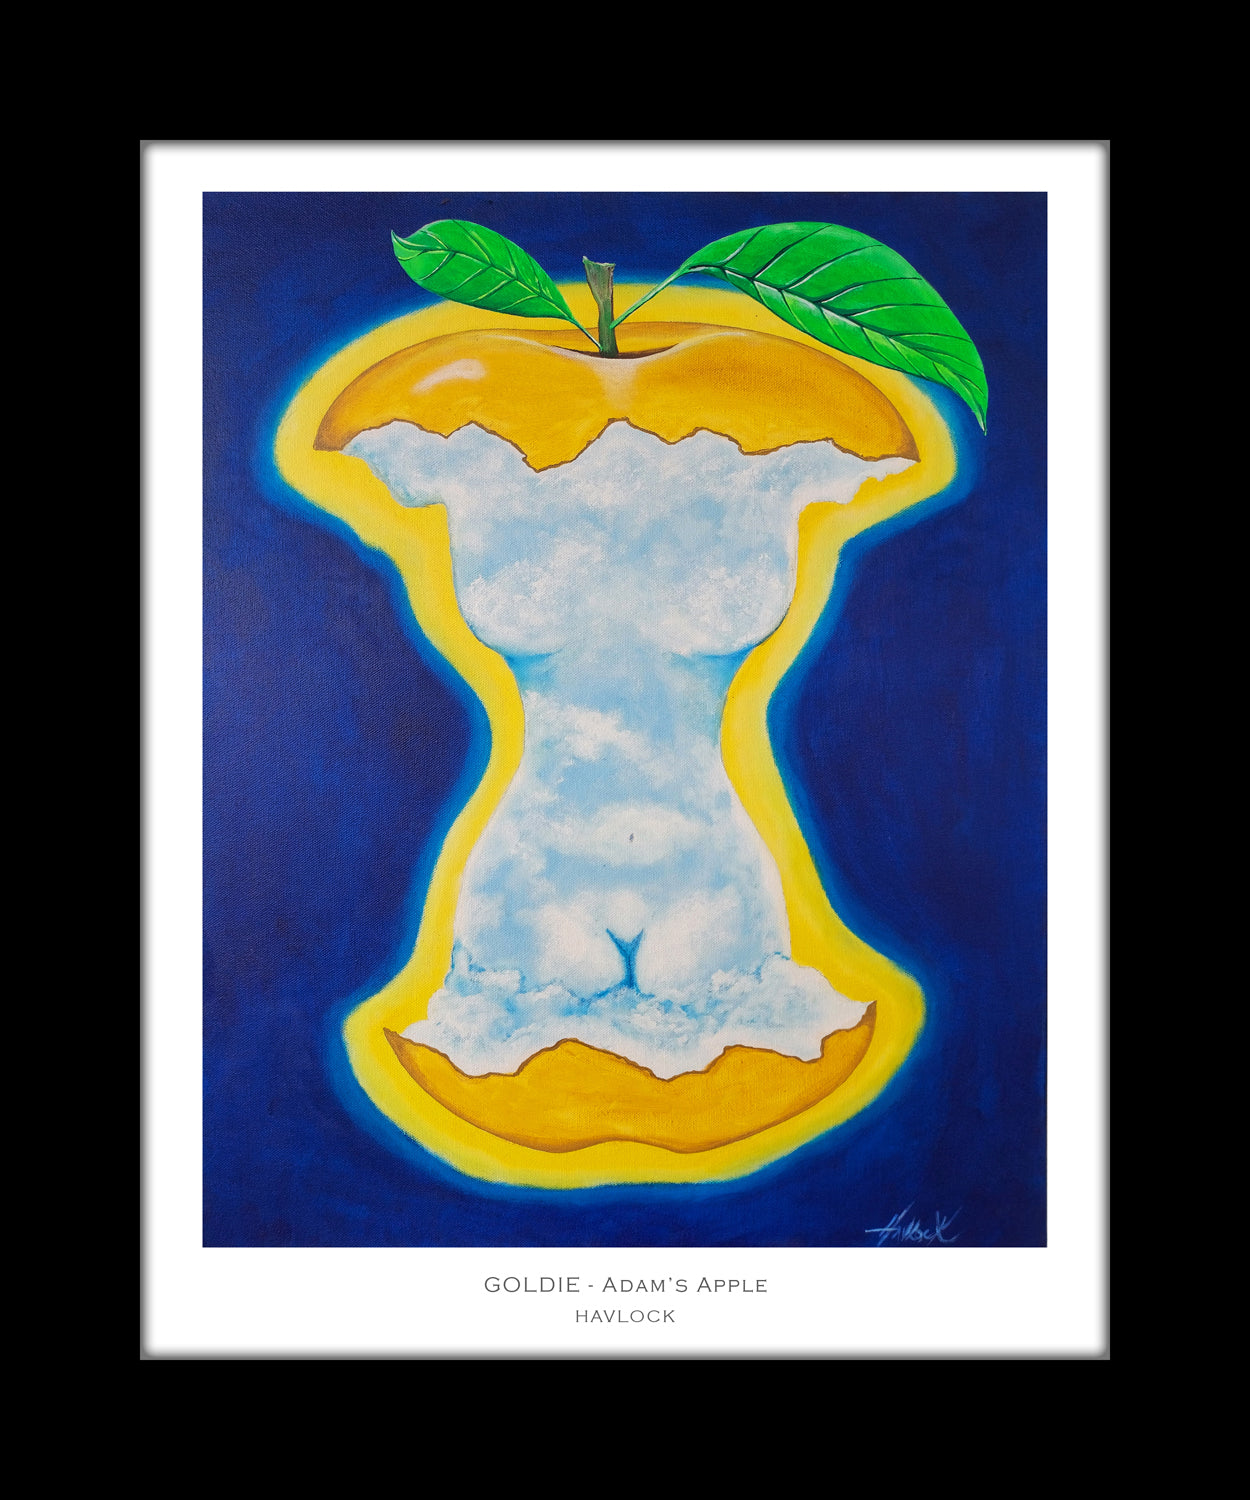 Goldie ~ Garden of Eve - 8x10 Print in Collector's Sleeve